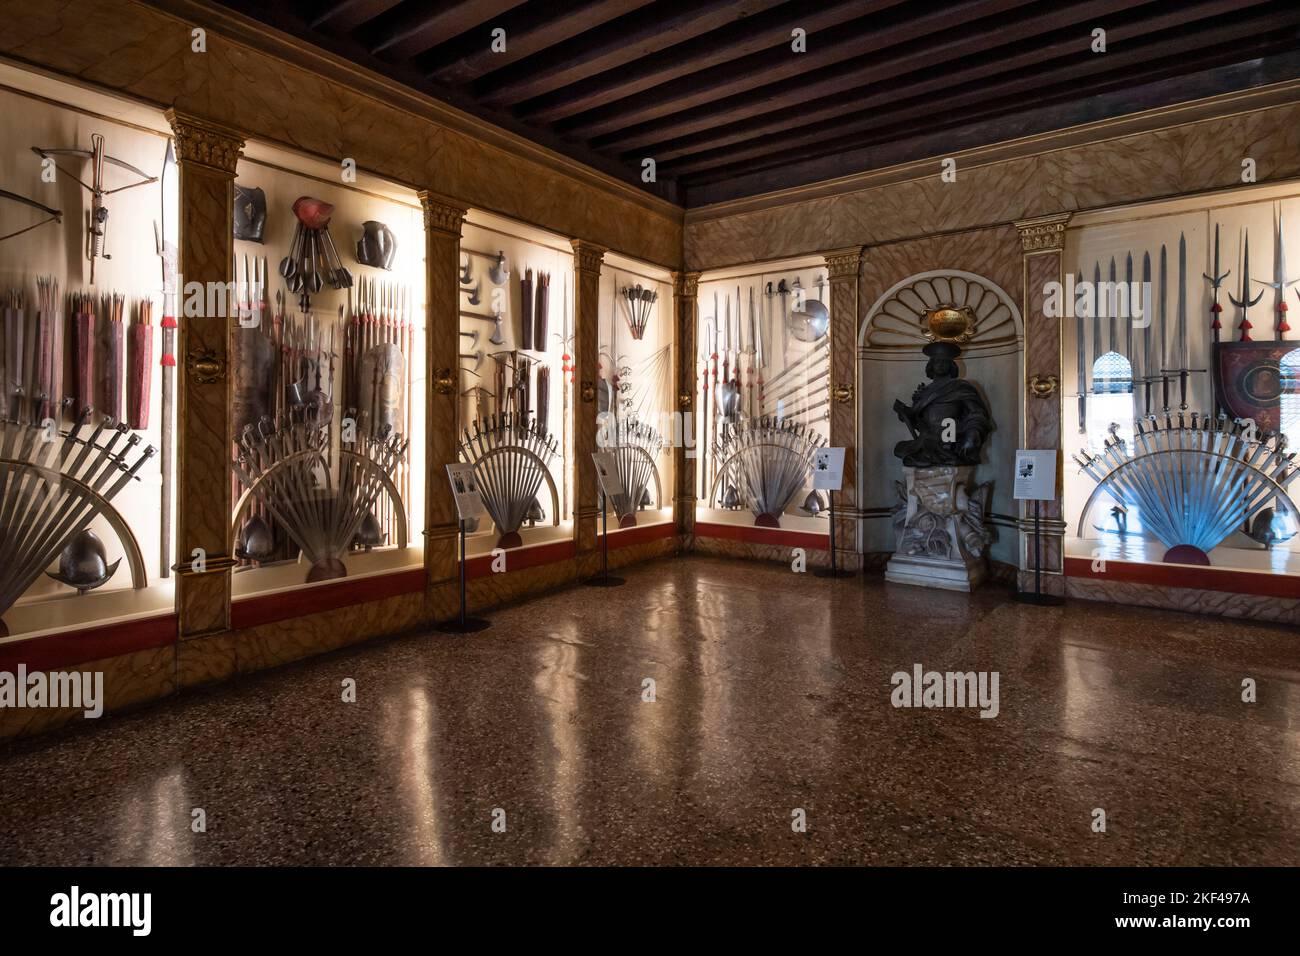 Ausstellung alter Waffen, Dogenpalast, Stadtteil San Marco, Venedig, Region Venetien, Italien Stock Photo